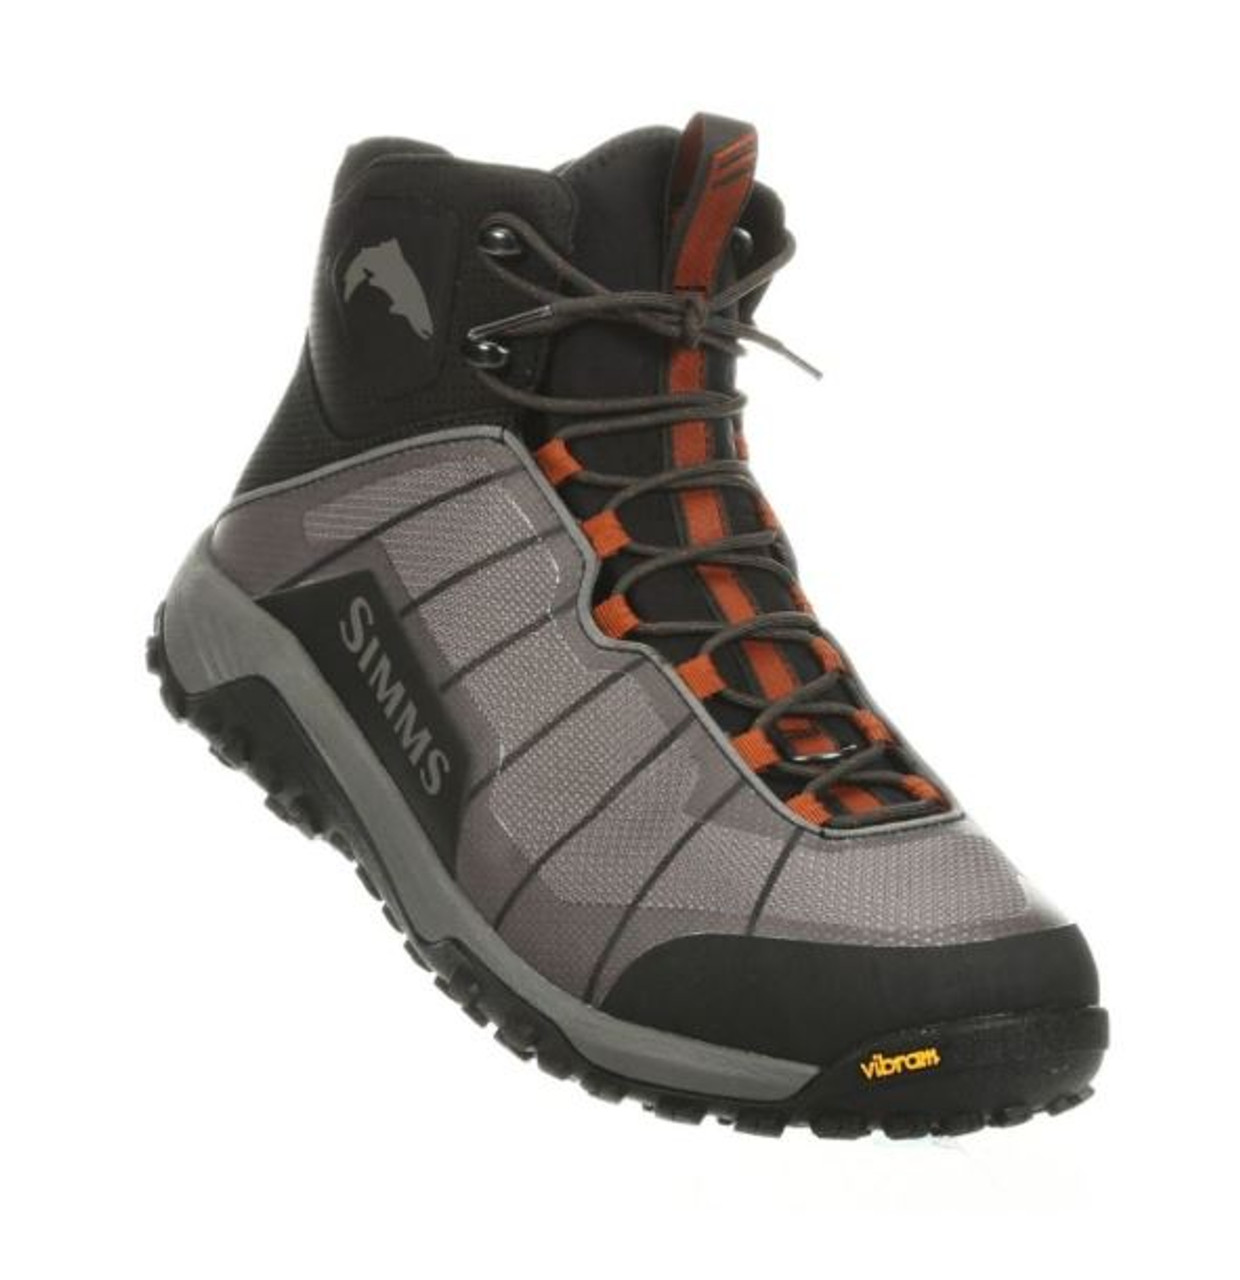 Flyweight Wading Boot - Vibram Sole (Size 12) - Steel Grey